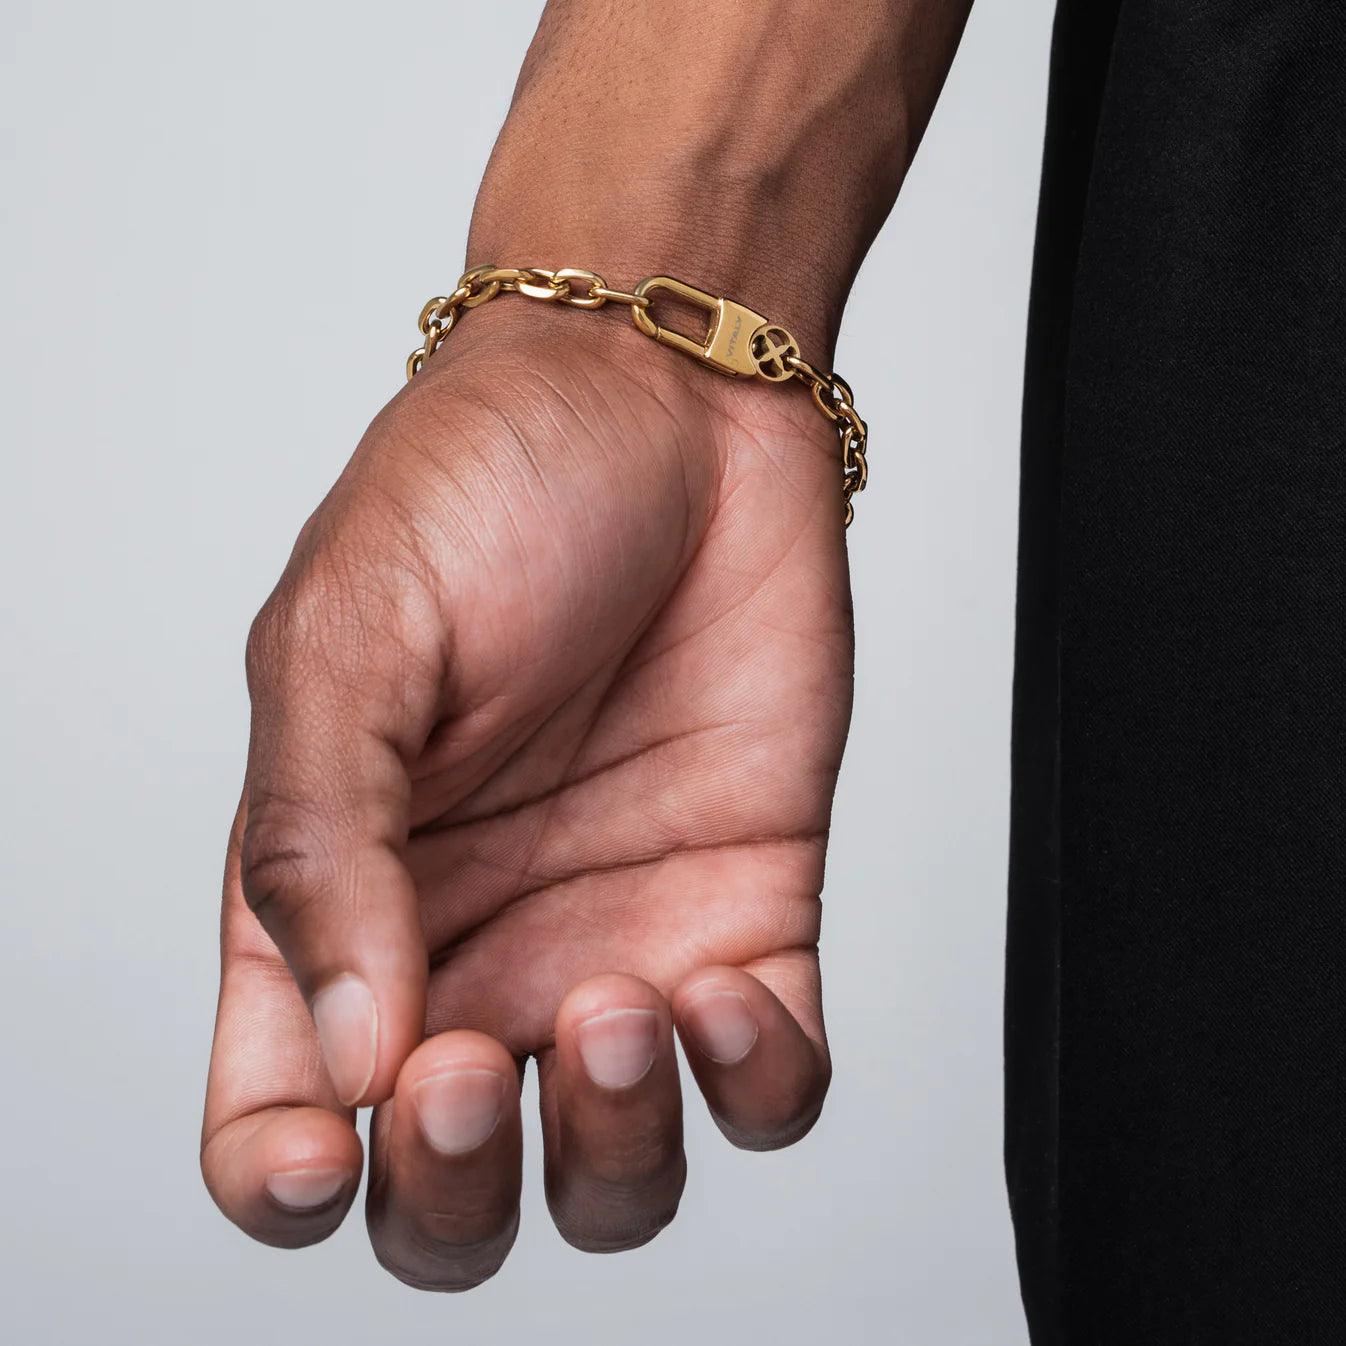 Amazon.com: Nuragold 10k Yellow Gold 9mm Thick Miami Cuban Link Chain  Bracelet, Mens Wide Jewelry Box Clasp 7